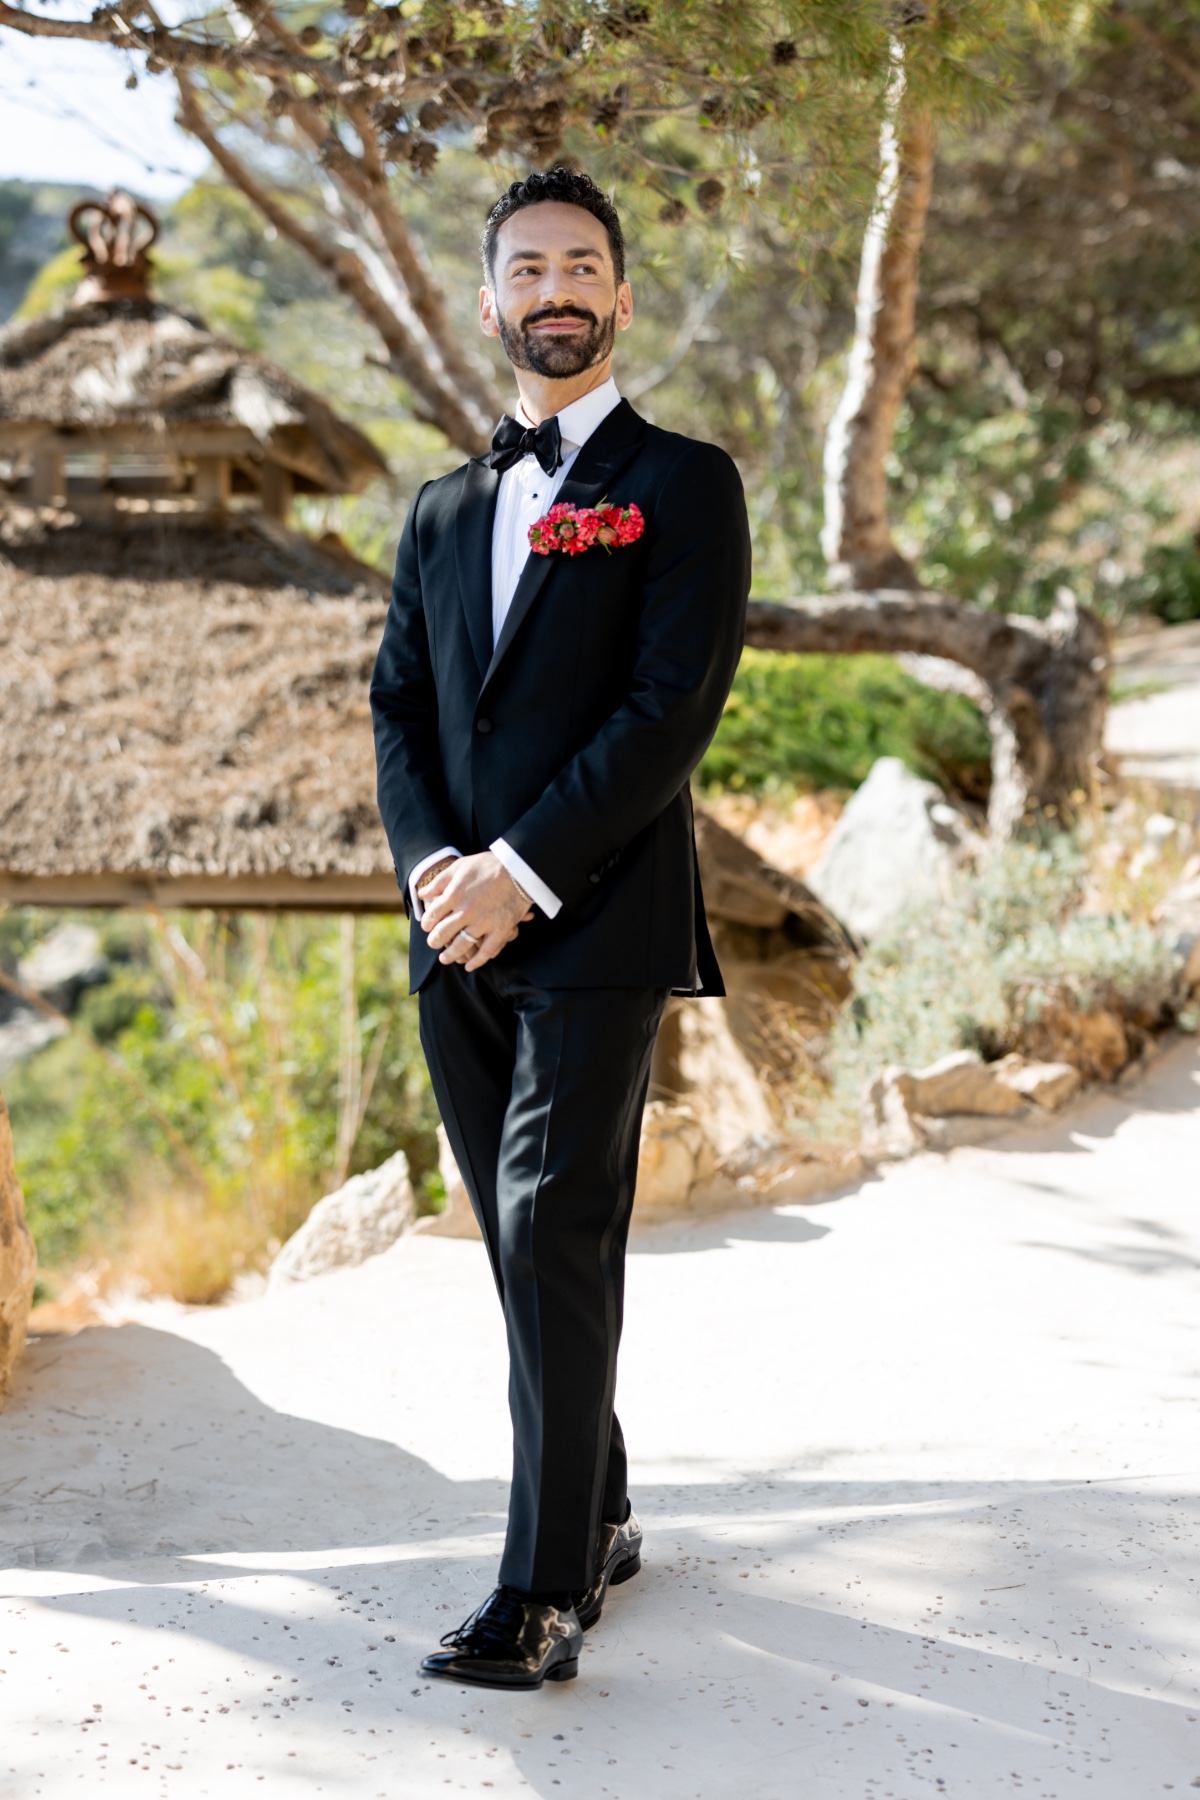 Fashionable LGBTQ groom in tailored tuxedo in Ibiza 